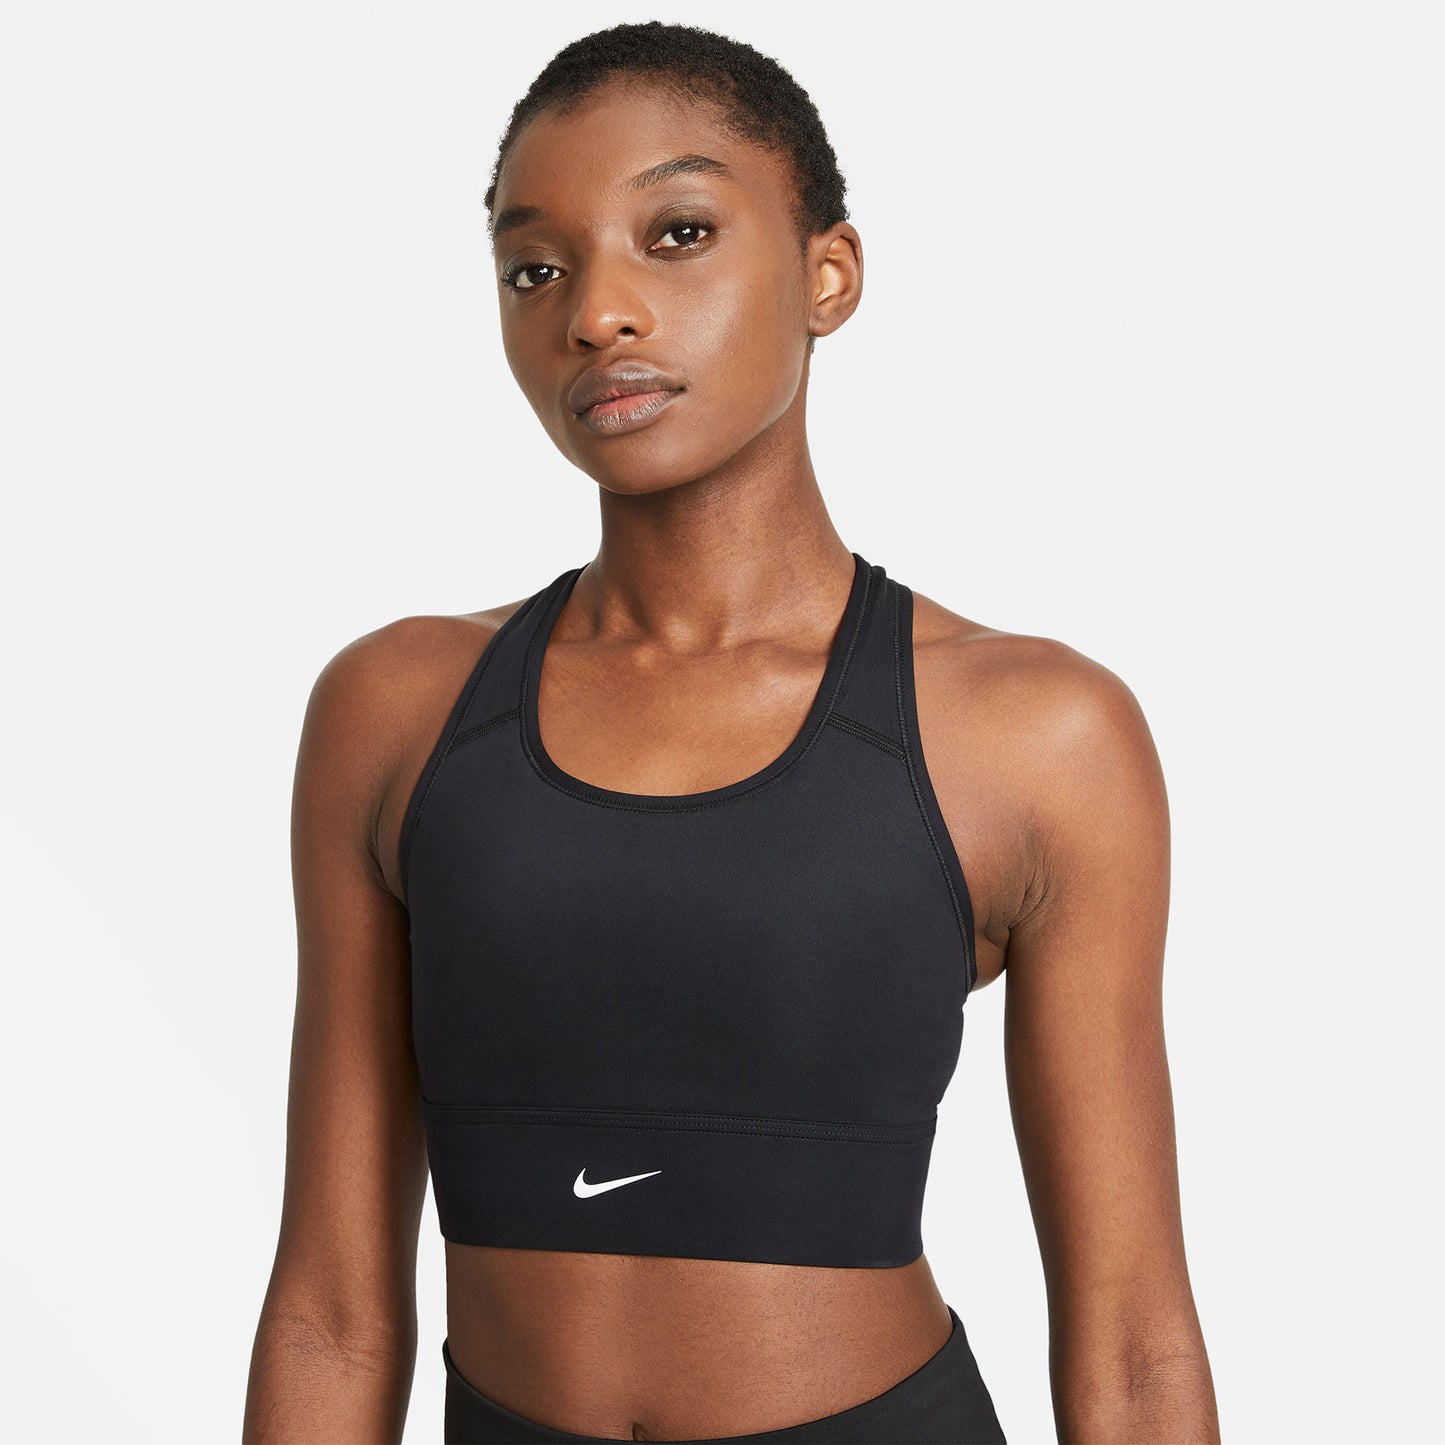 Women's Nike Swoosh Medium-Support Longline Bra - Black/White